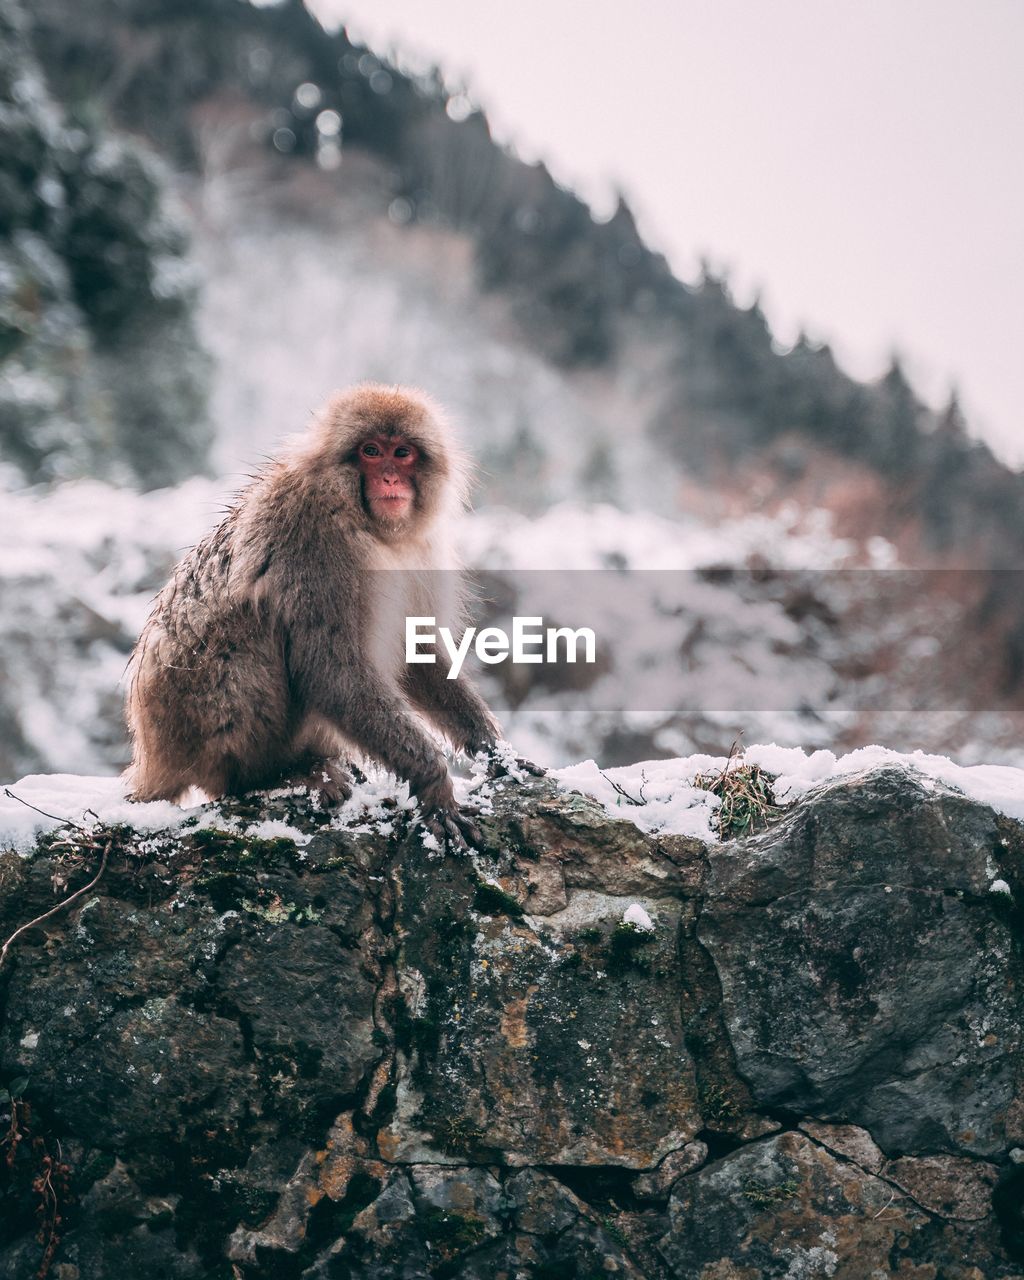 Monkey sitting on mountain during winter